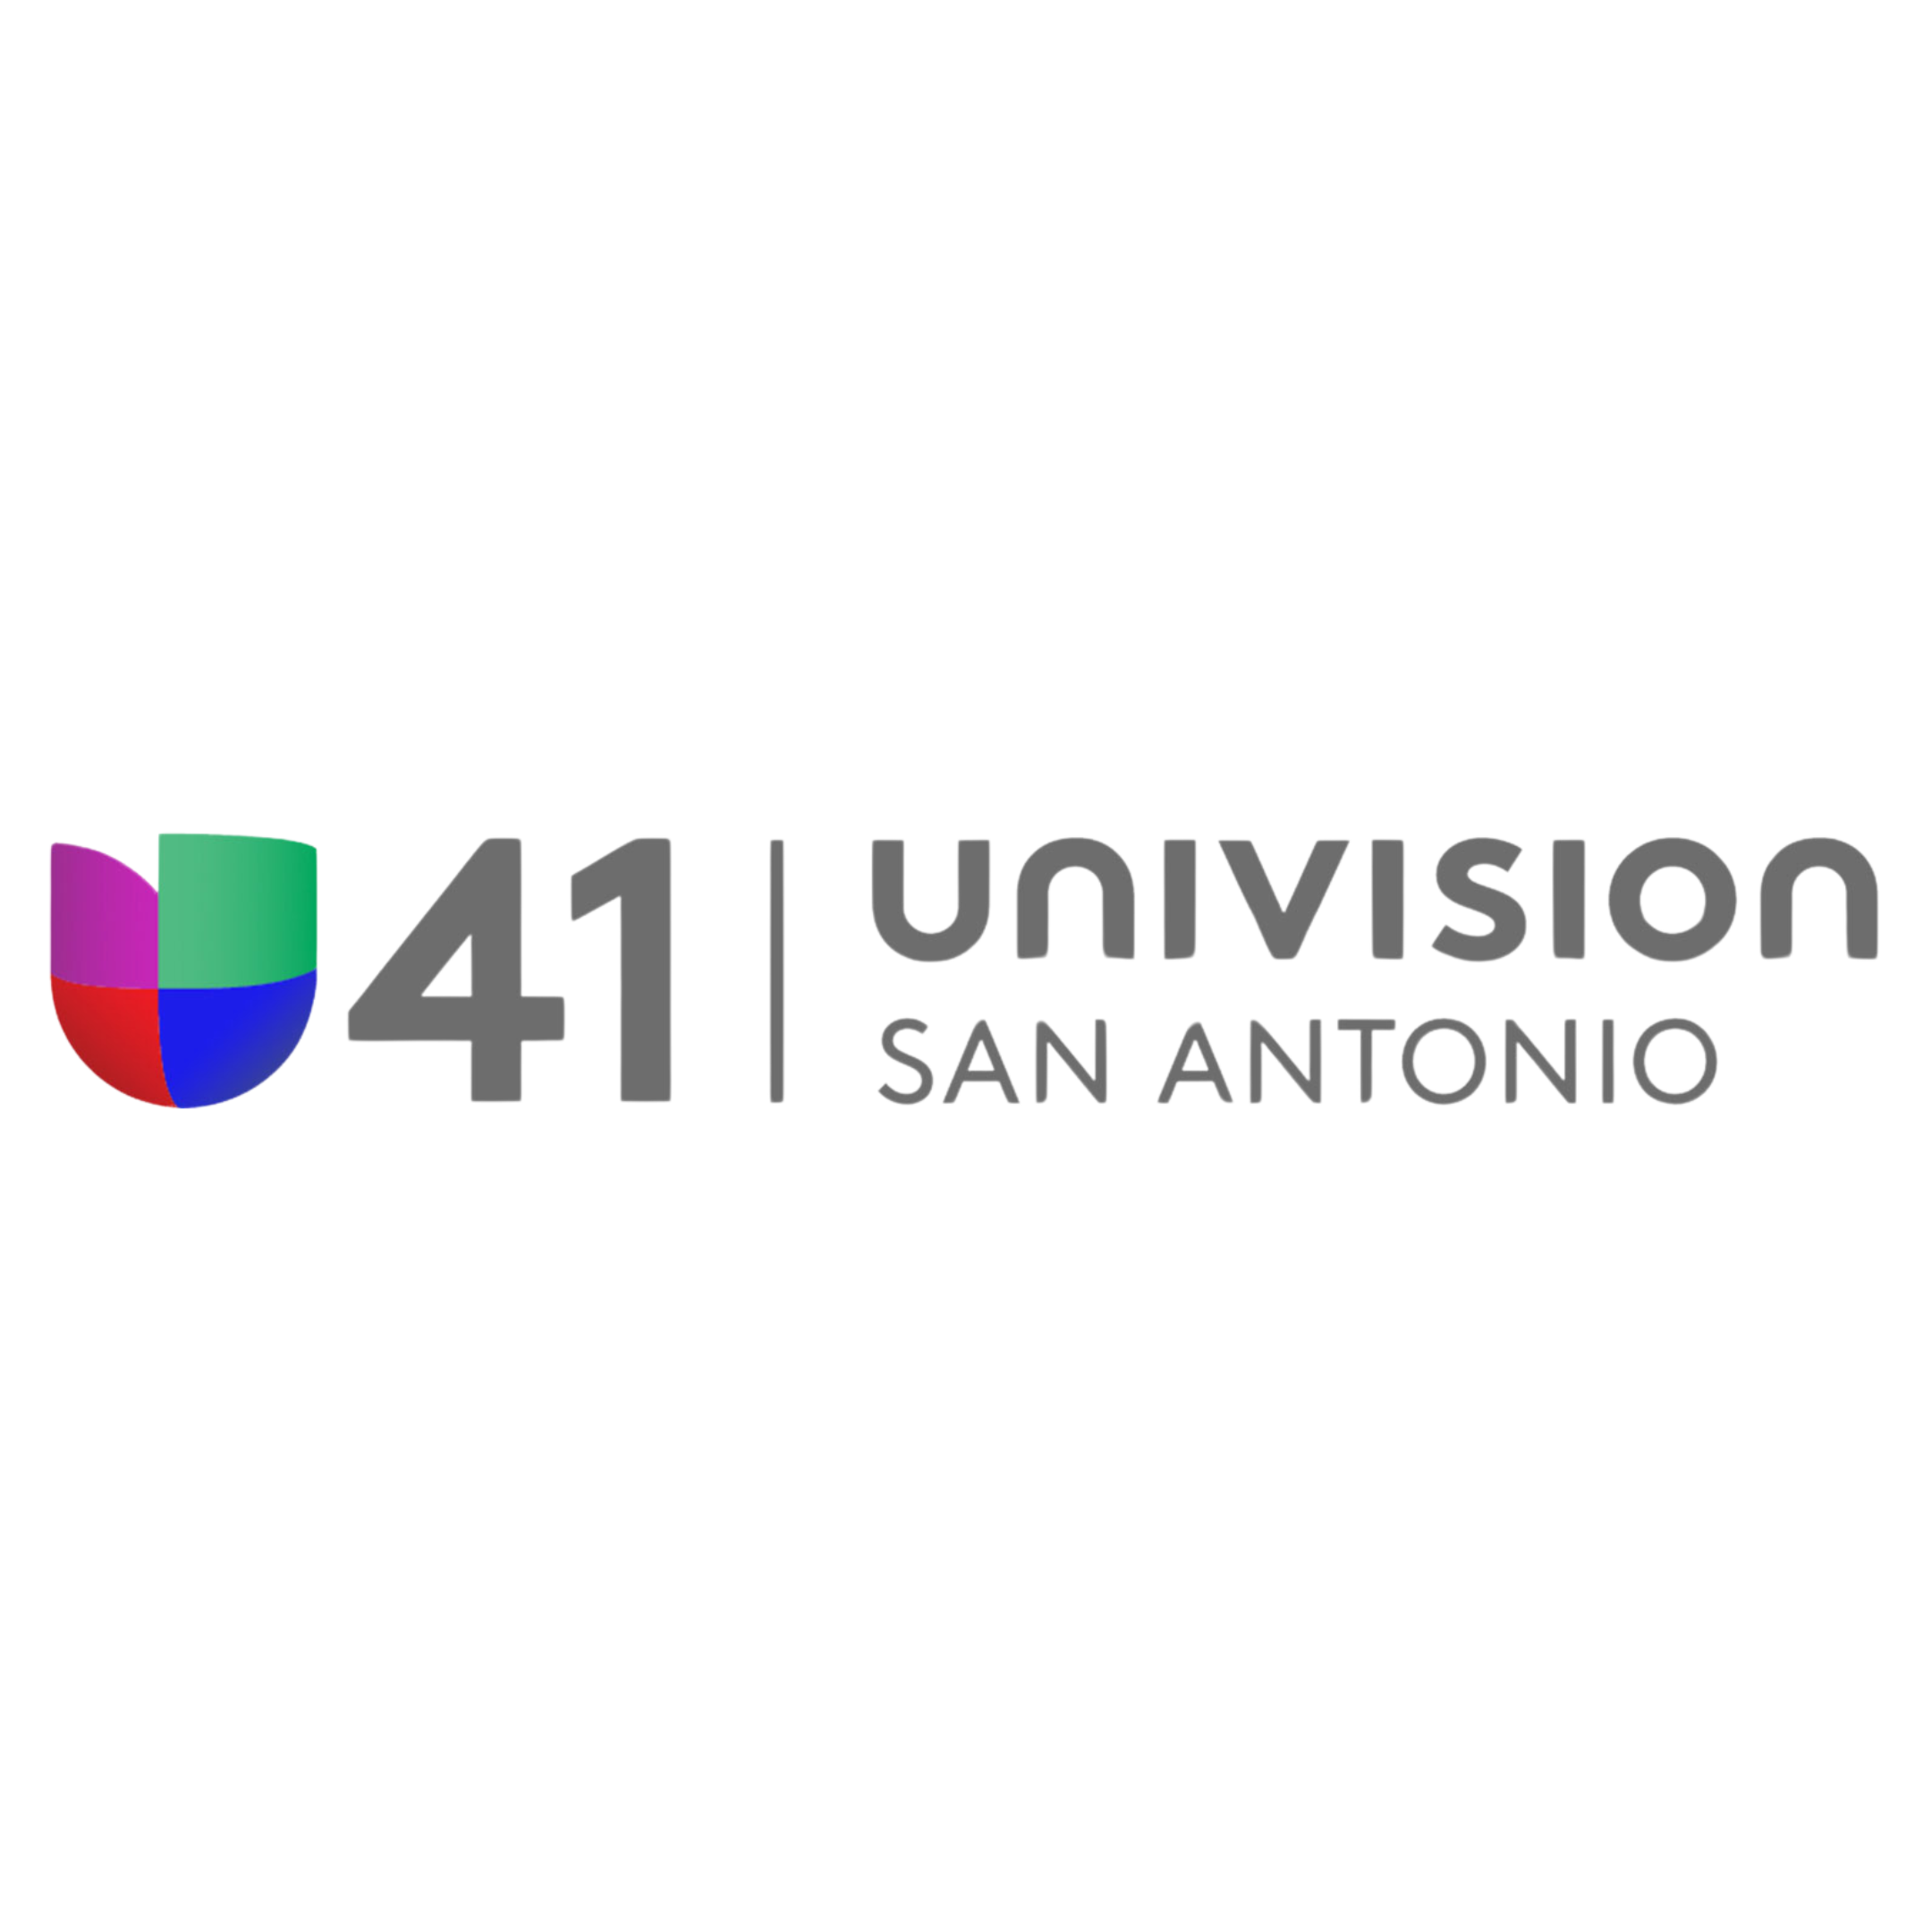 Univision 41 Logo.png